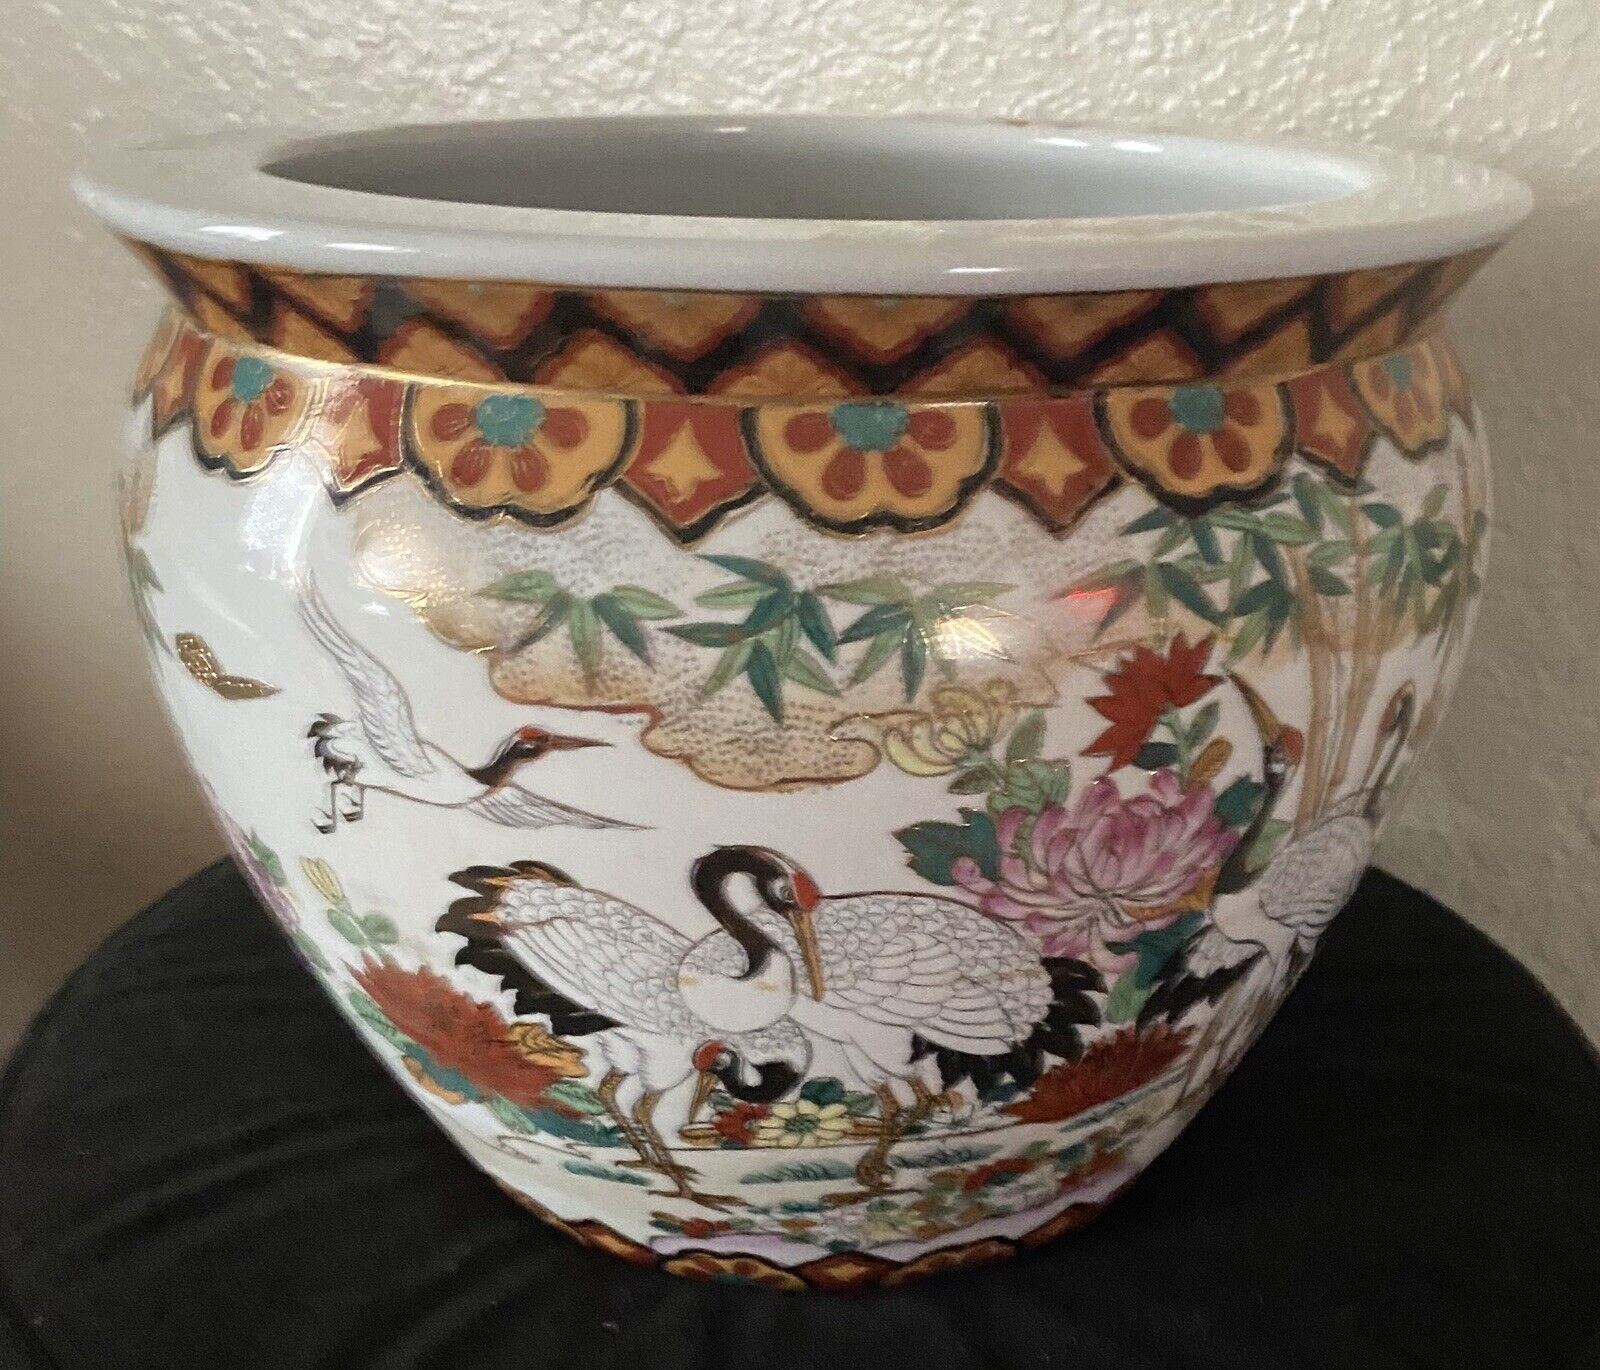 Vintage Porcelain W Gold Hand Painted Large Planter Vase - Many Decorative Image